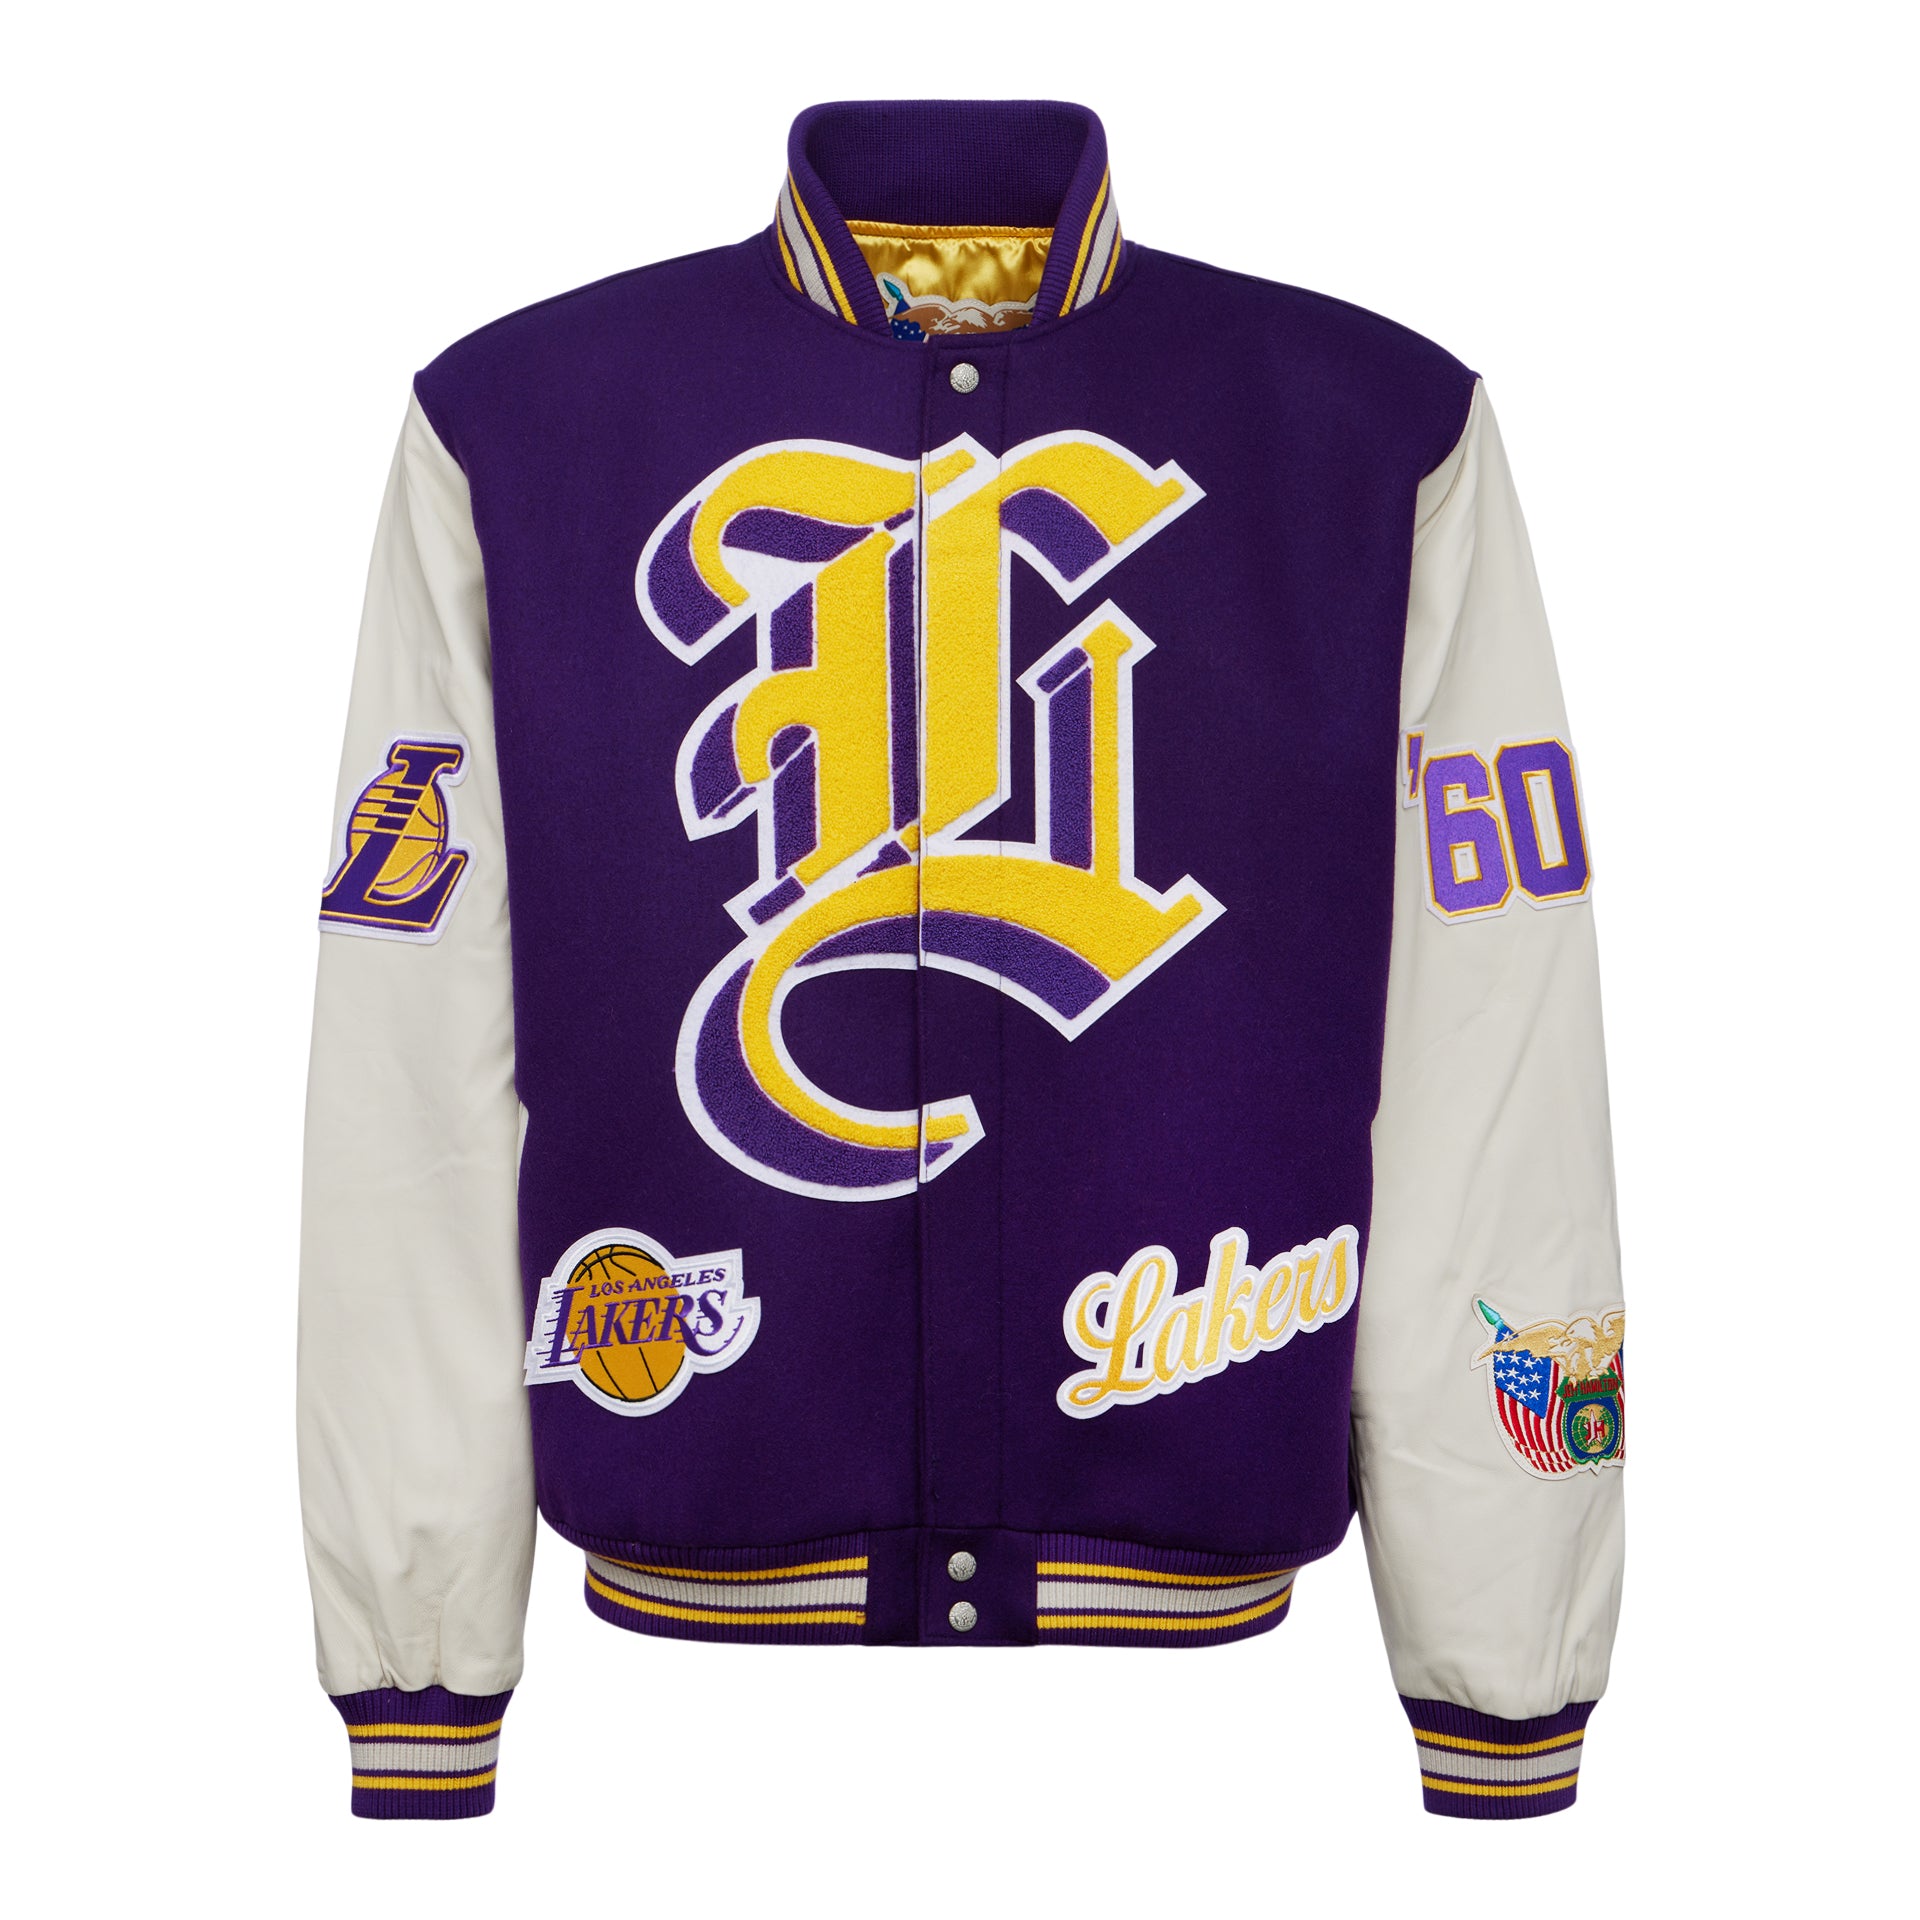 Black/White Wool/Leather NBA LA Lakers Varsity Jacket - Jackets